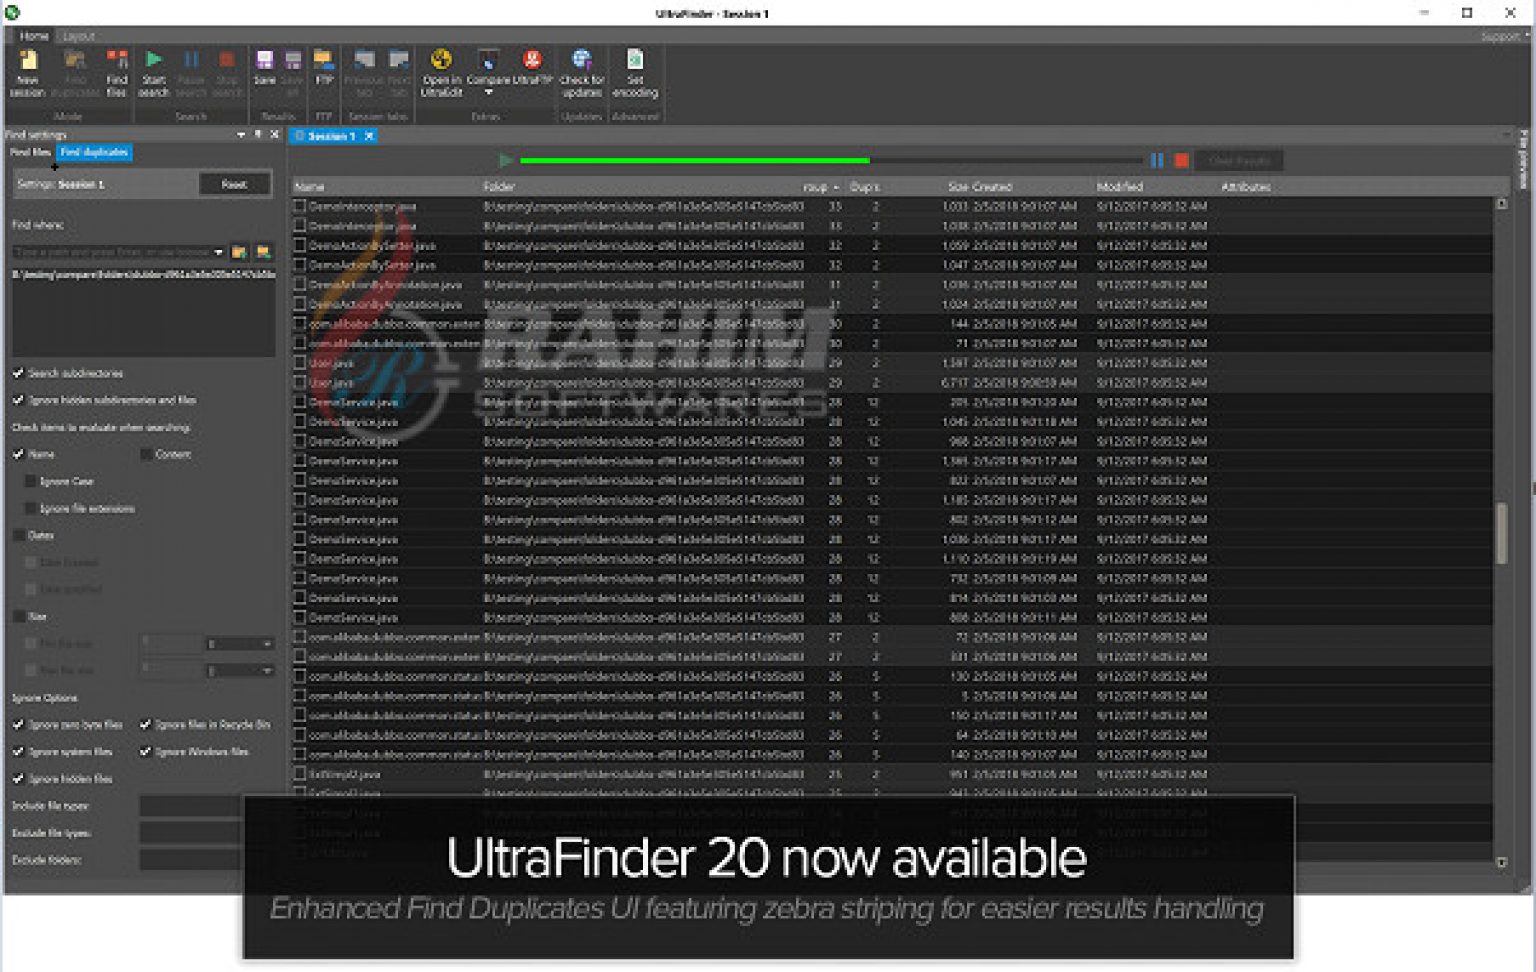 instal the last version for mac IDM UltraFinder 22.0.0.48